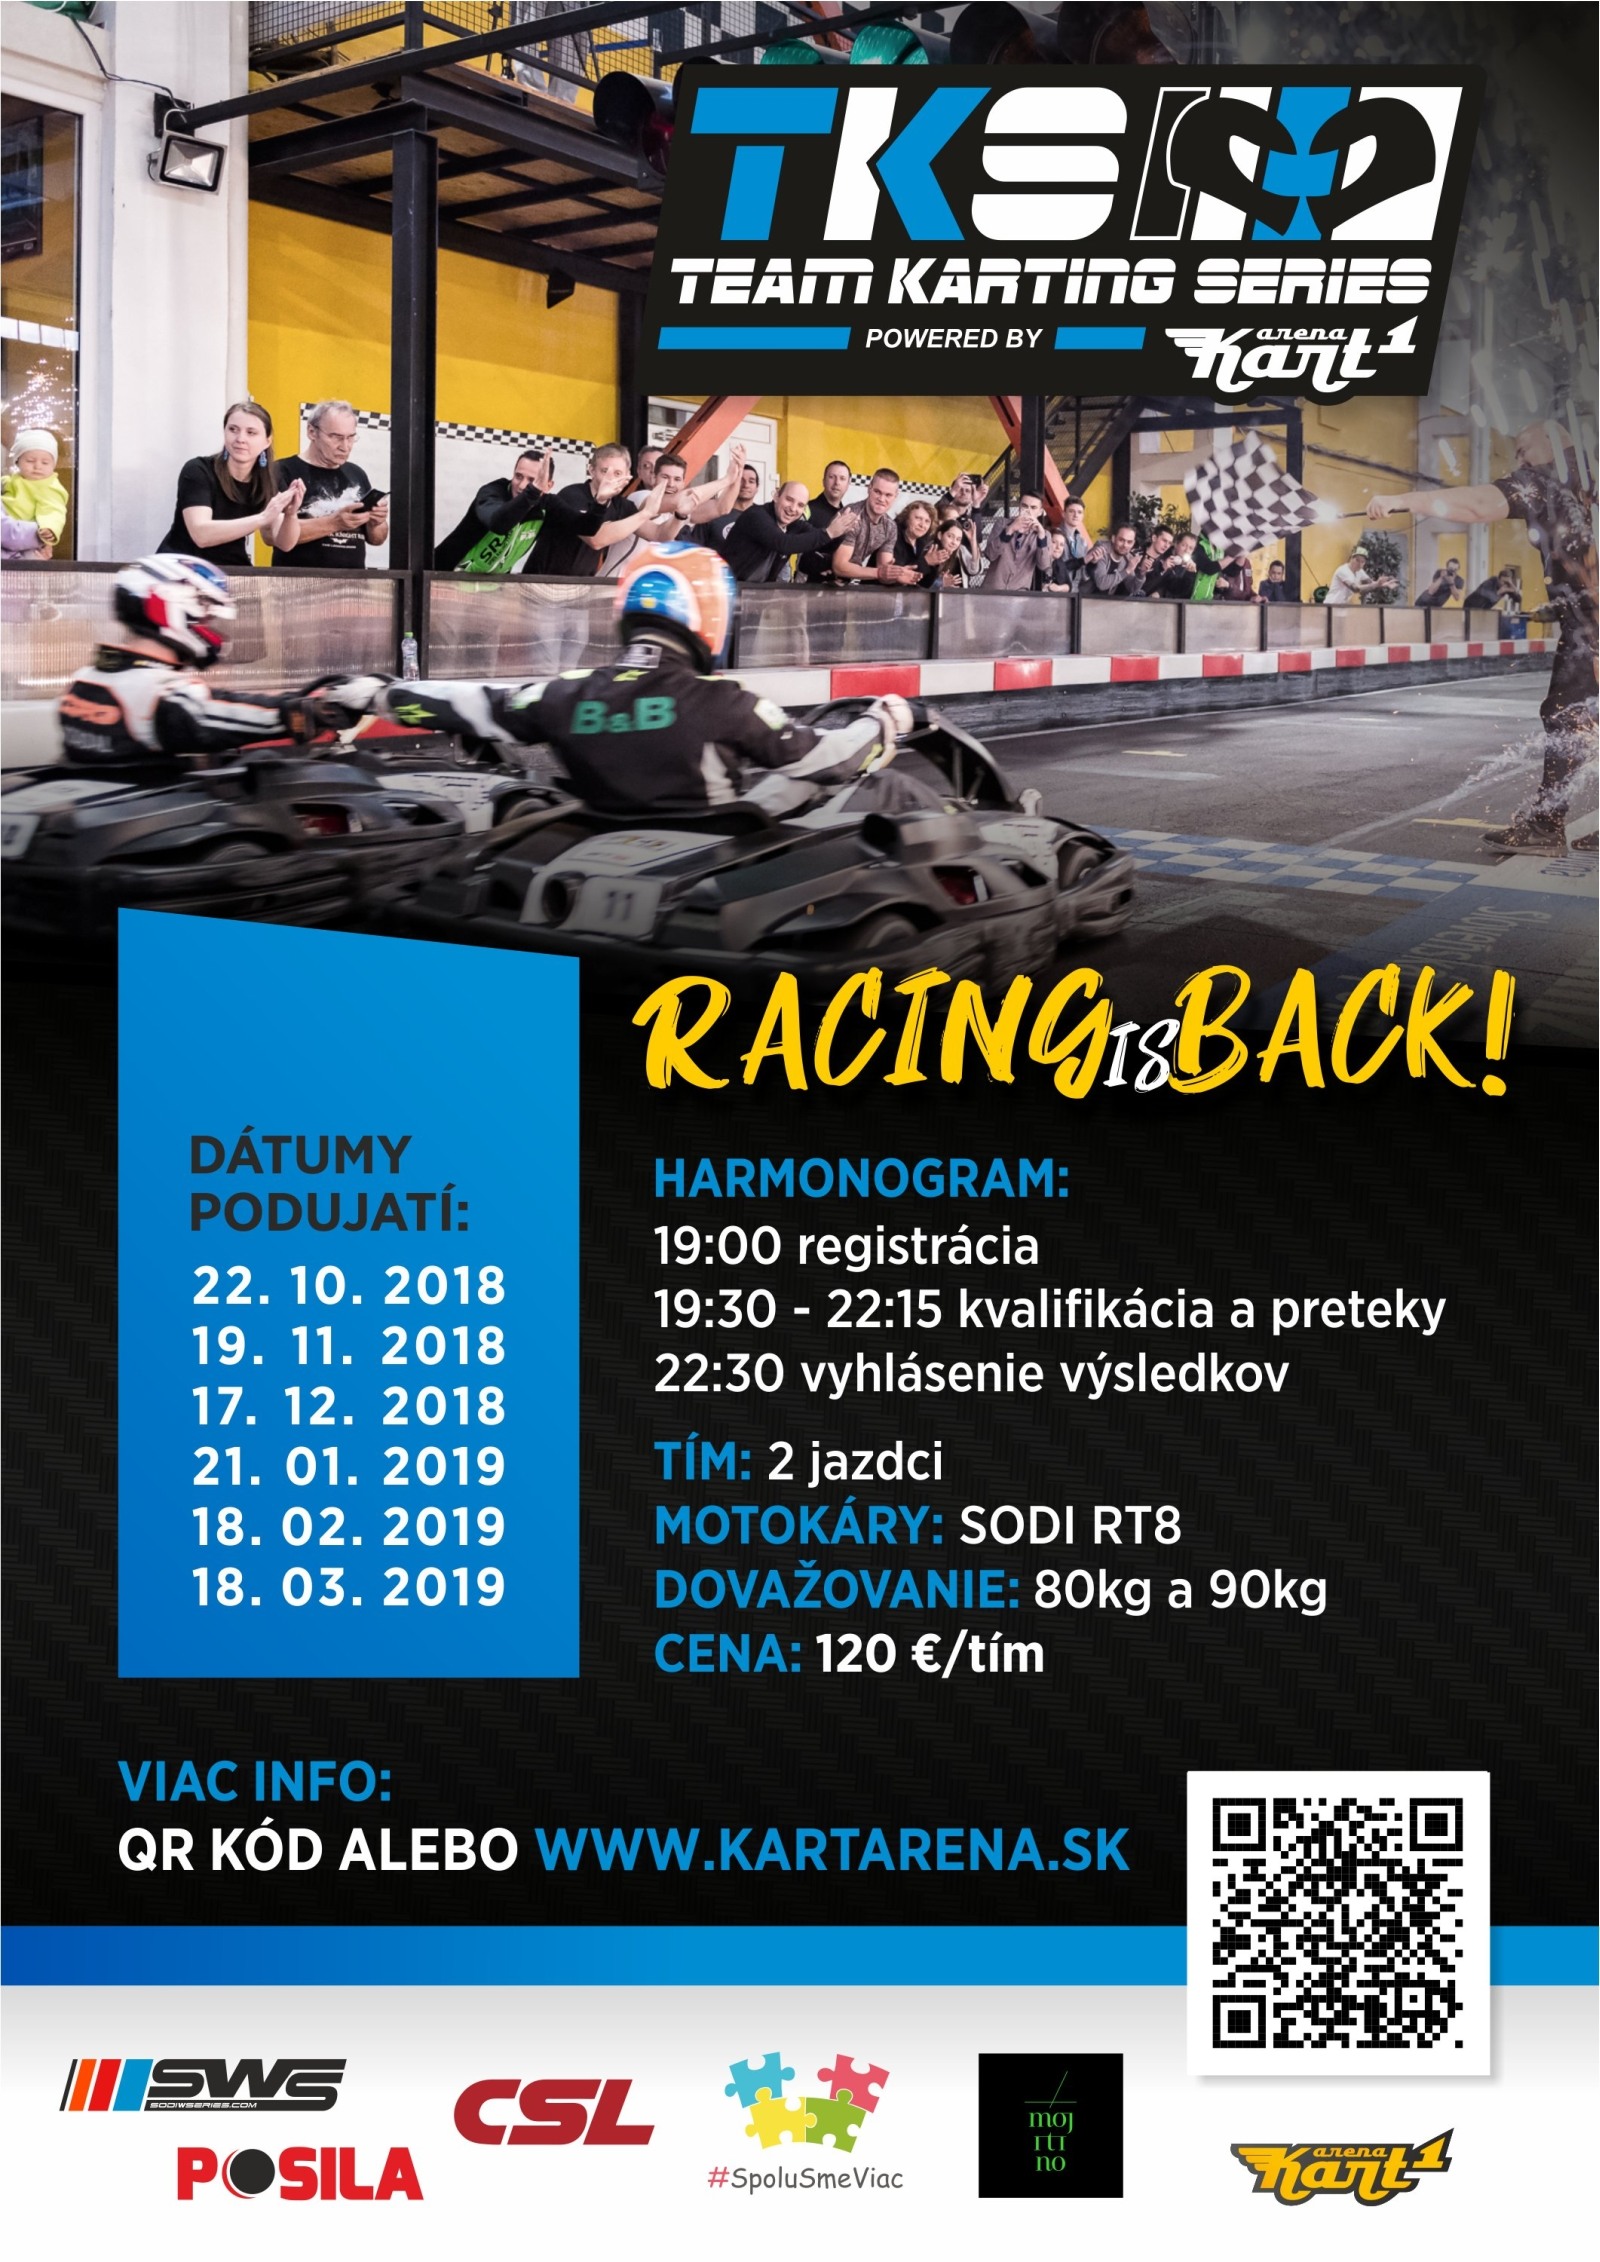 V Kart1 Arene štartuje zimný seriál Team Karting Series